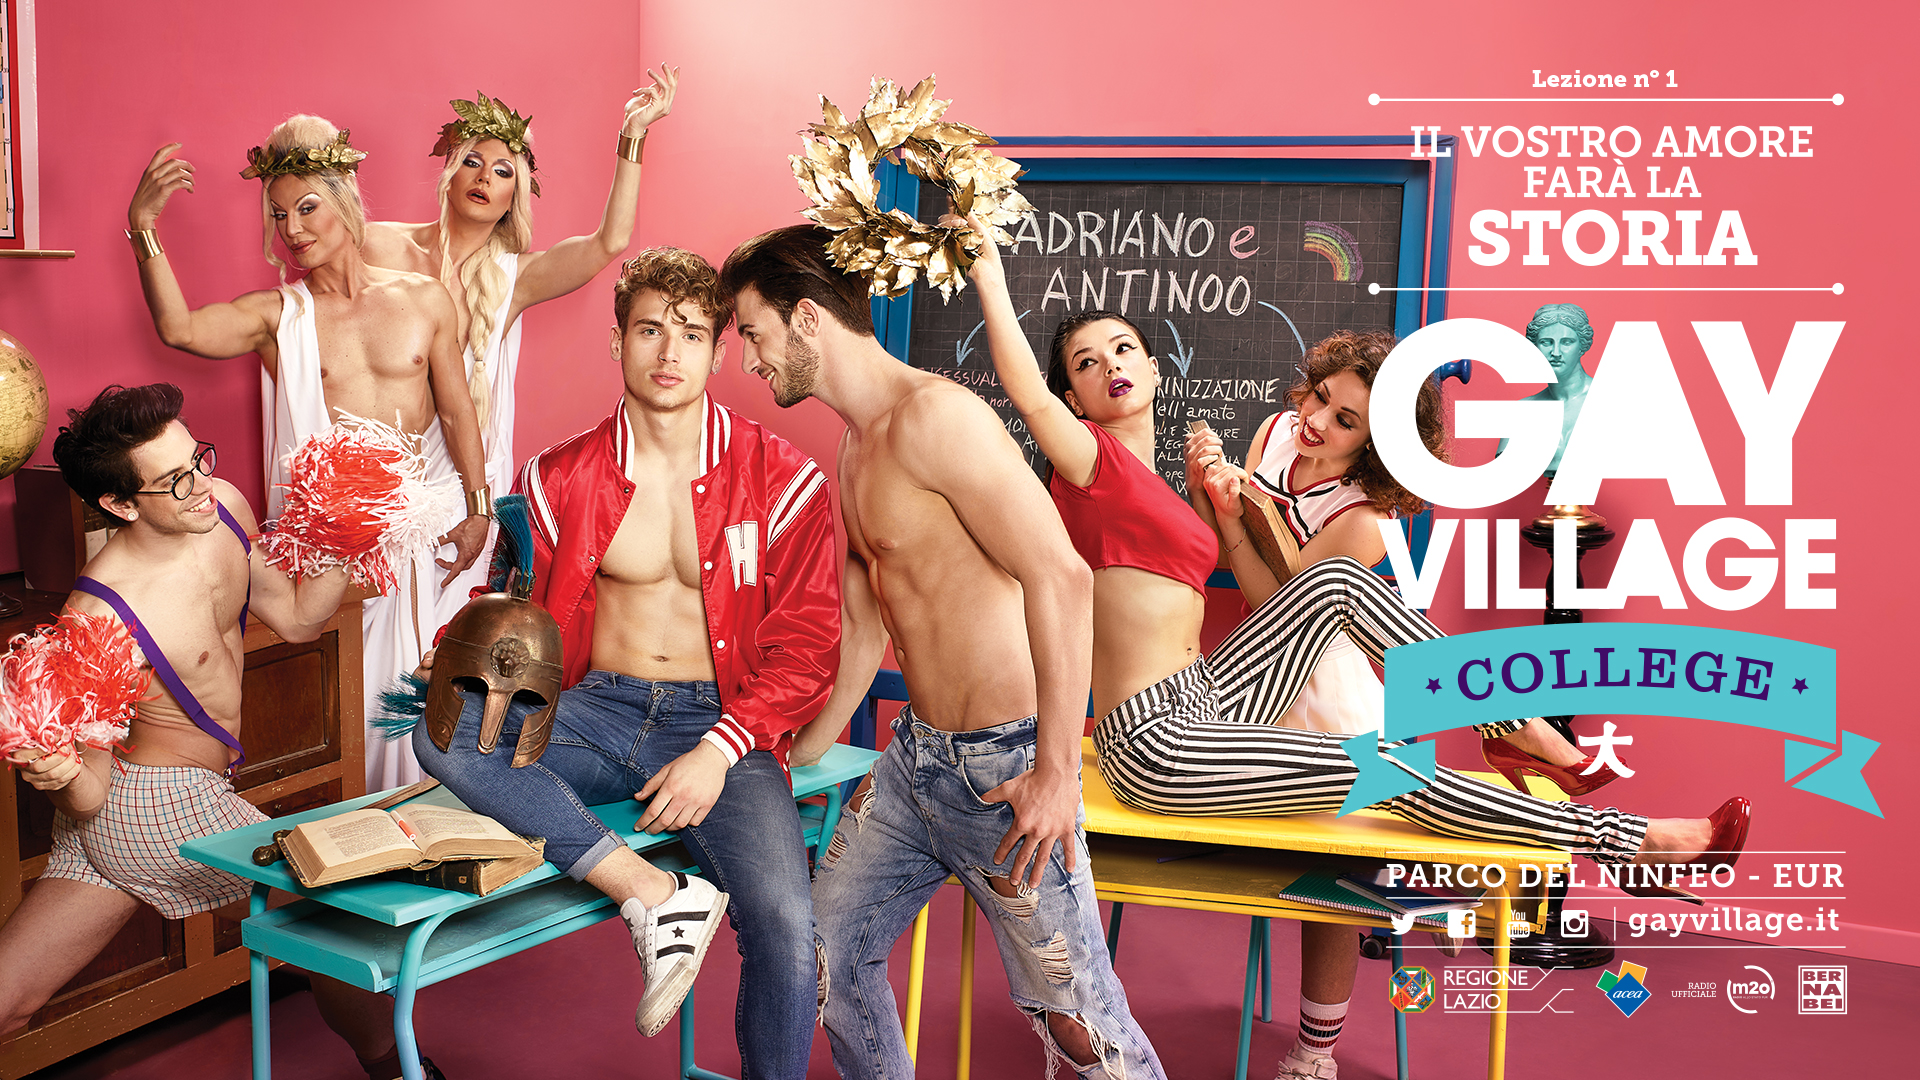 Roma, GayVillage: week end tra teatro, comicità e in concerto di Loredana Bertè